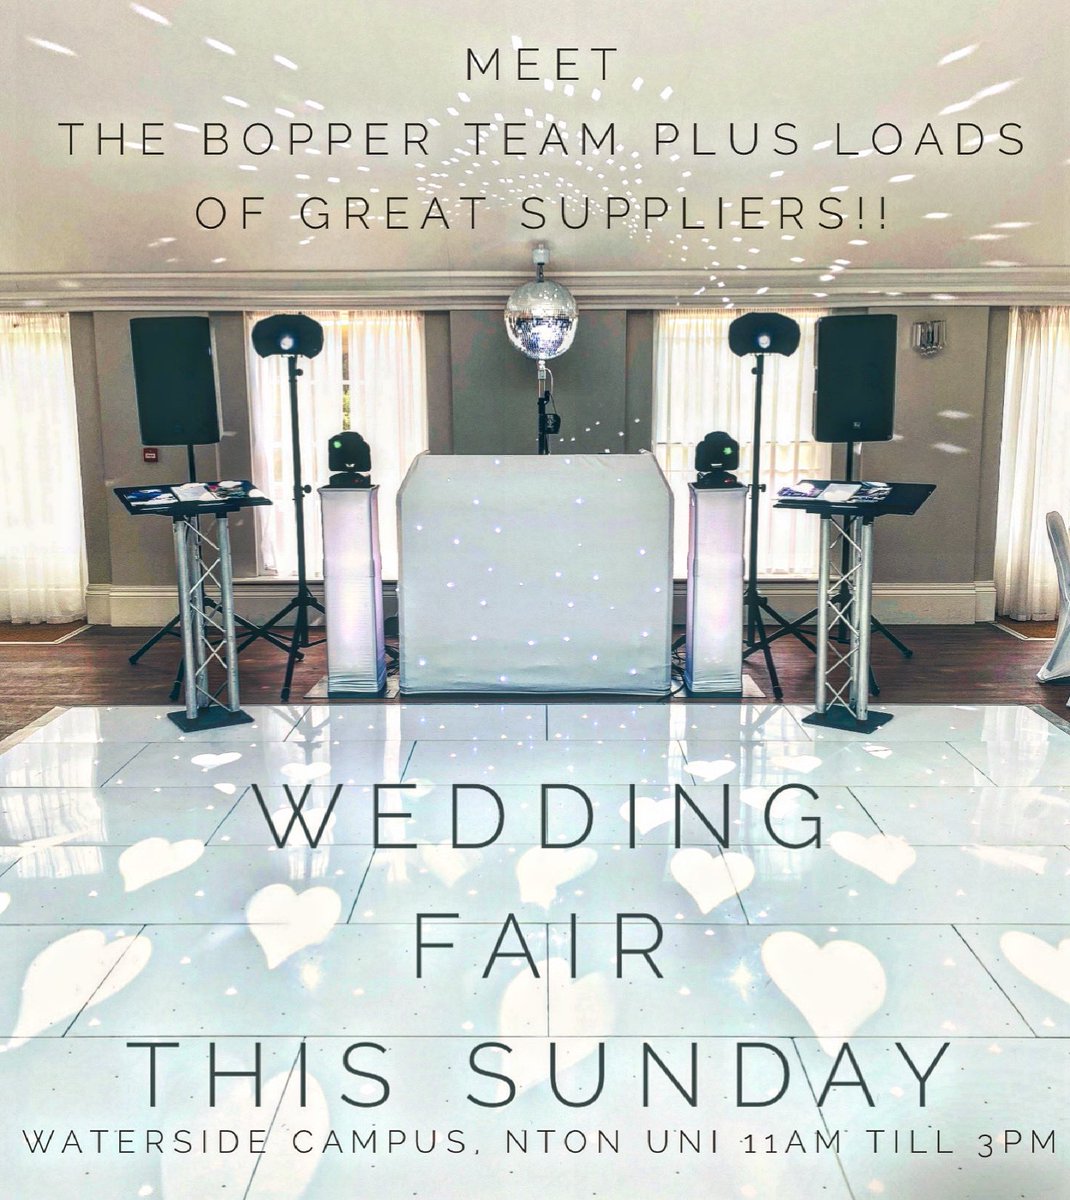 Wedding Fair this Sunday (5th Feb) with @Wedding_fairs at Northampton Uni, Waterside Campus 11 till 3 .. see you there #wedding #weddingfair #bopperteam